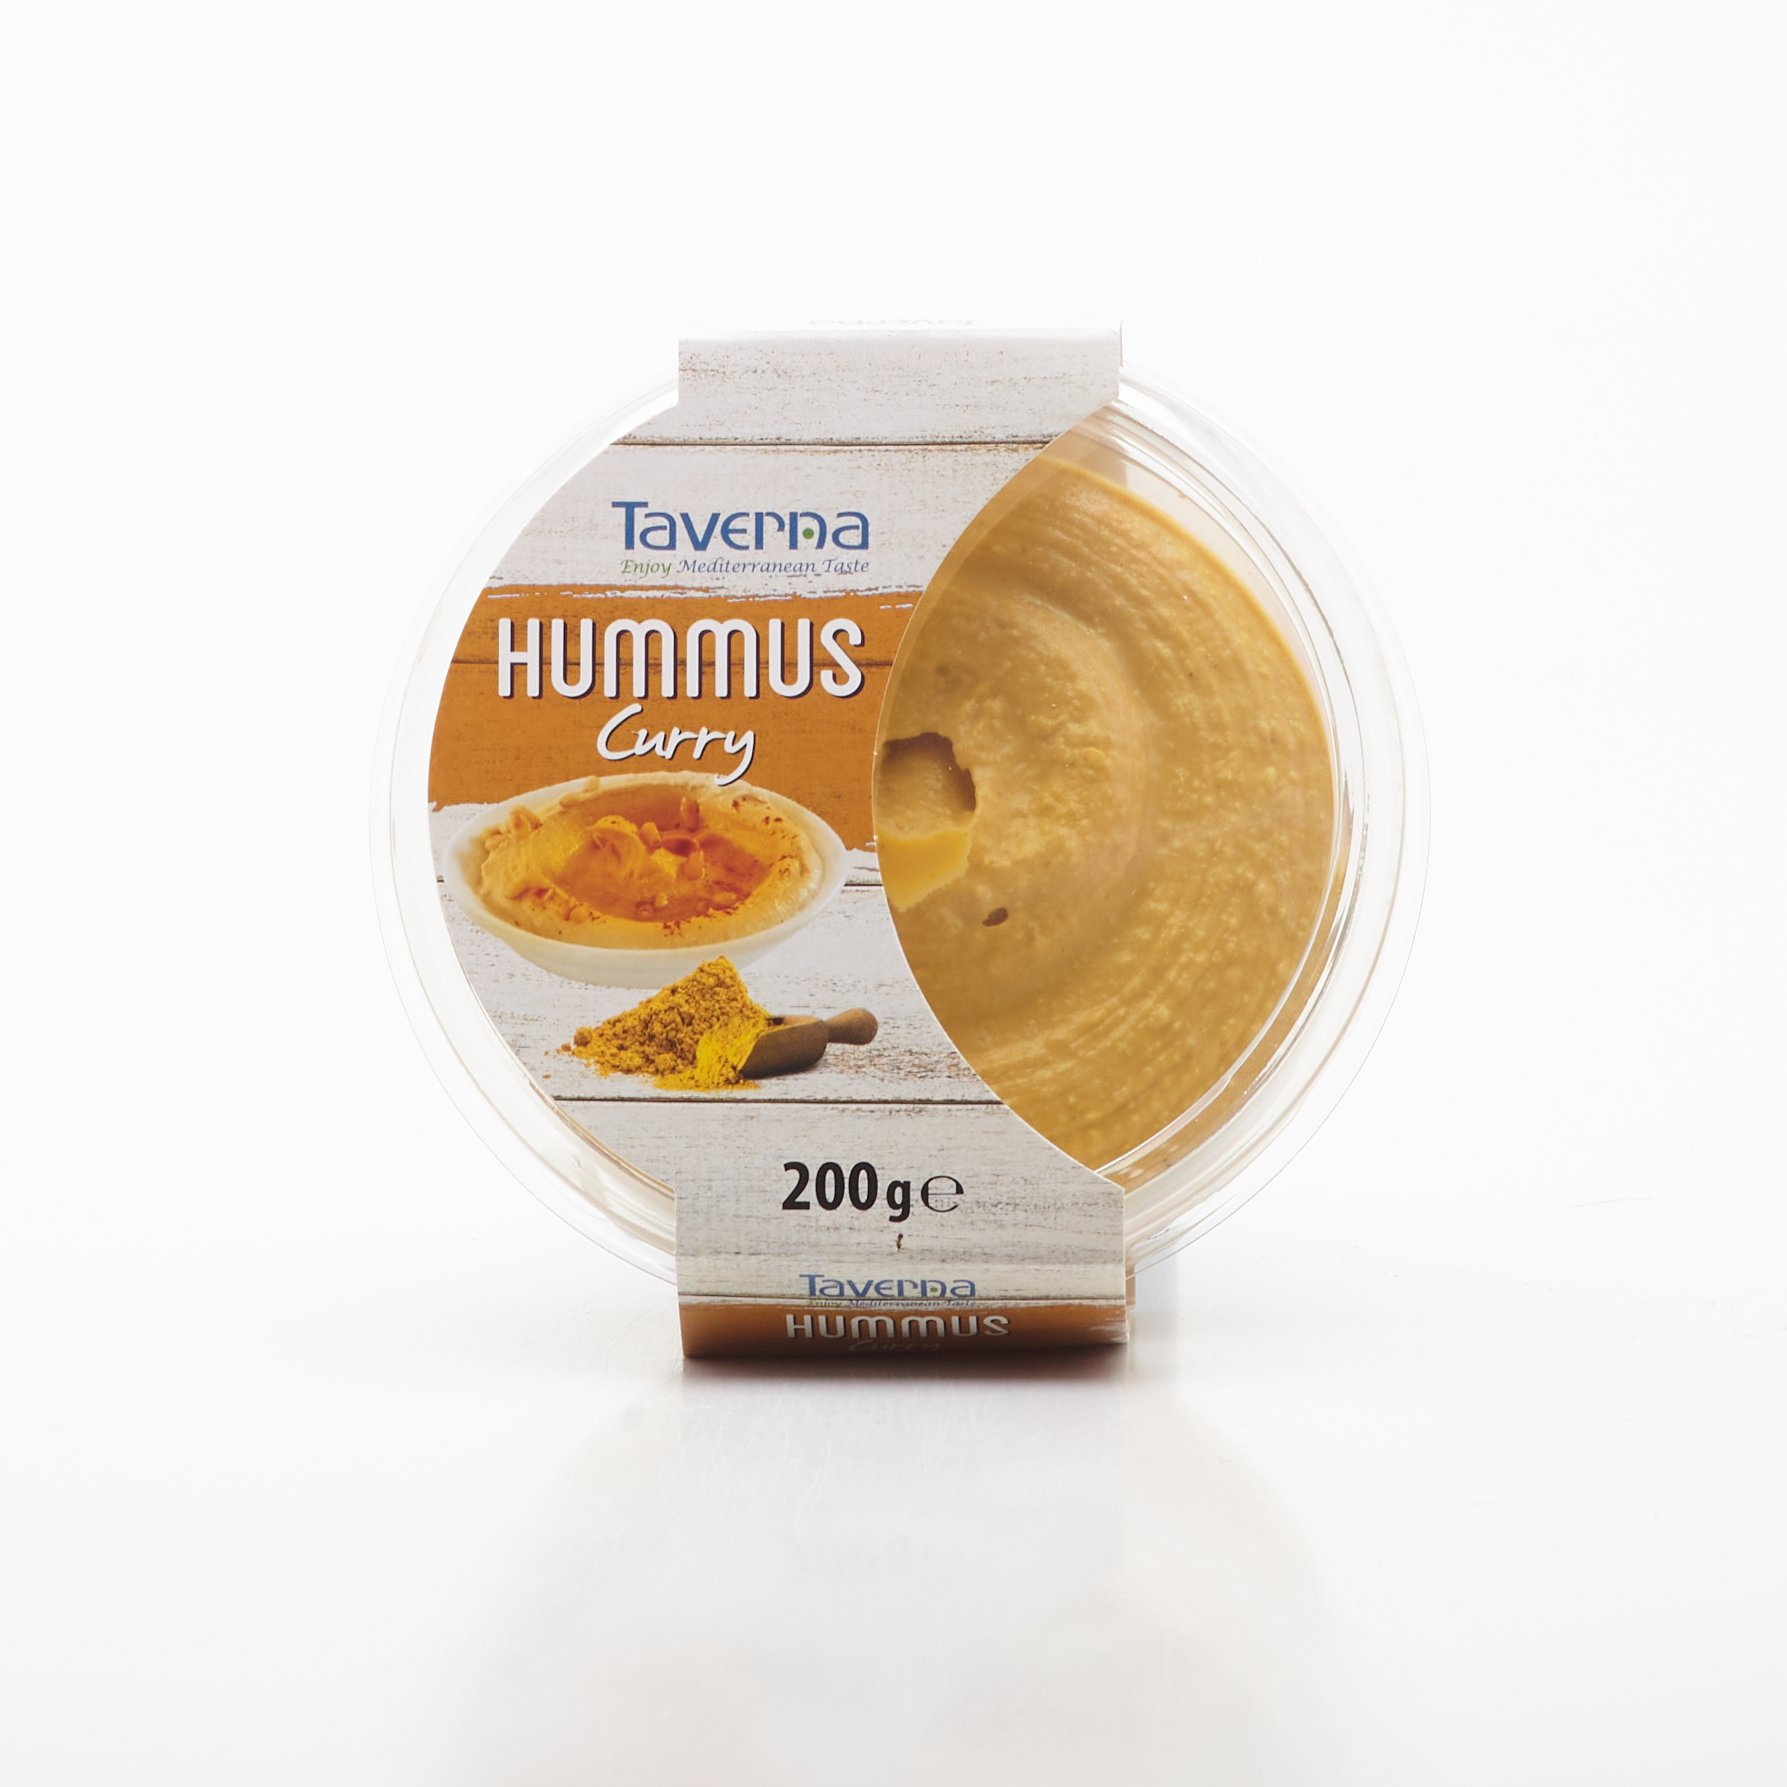 Hummus curry 200g